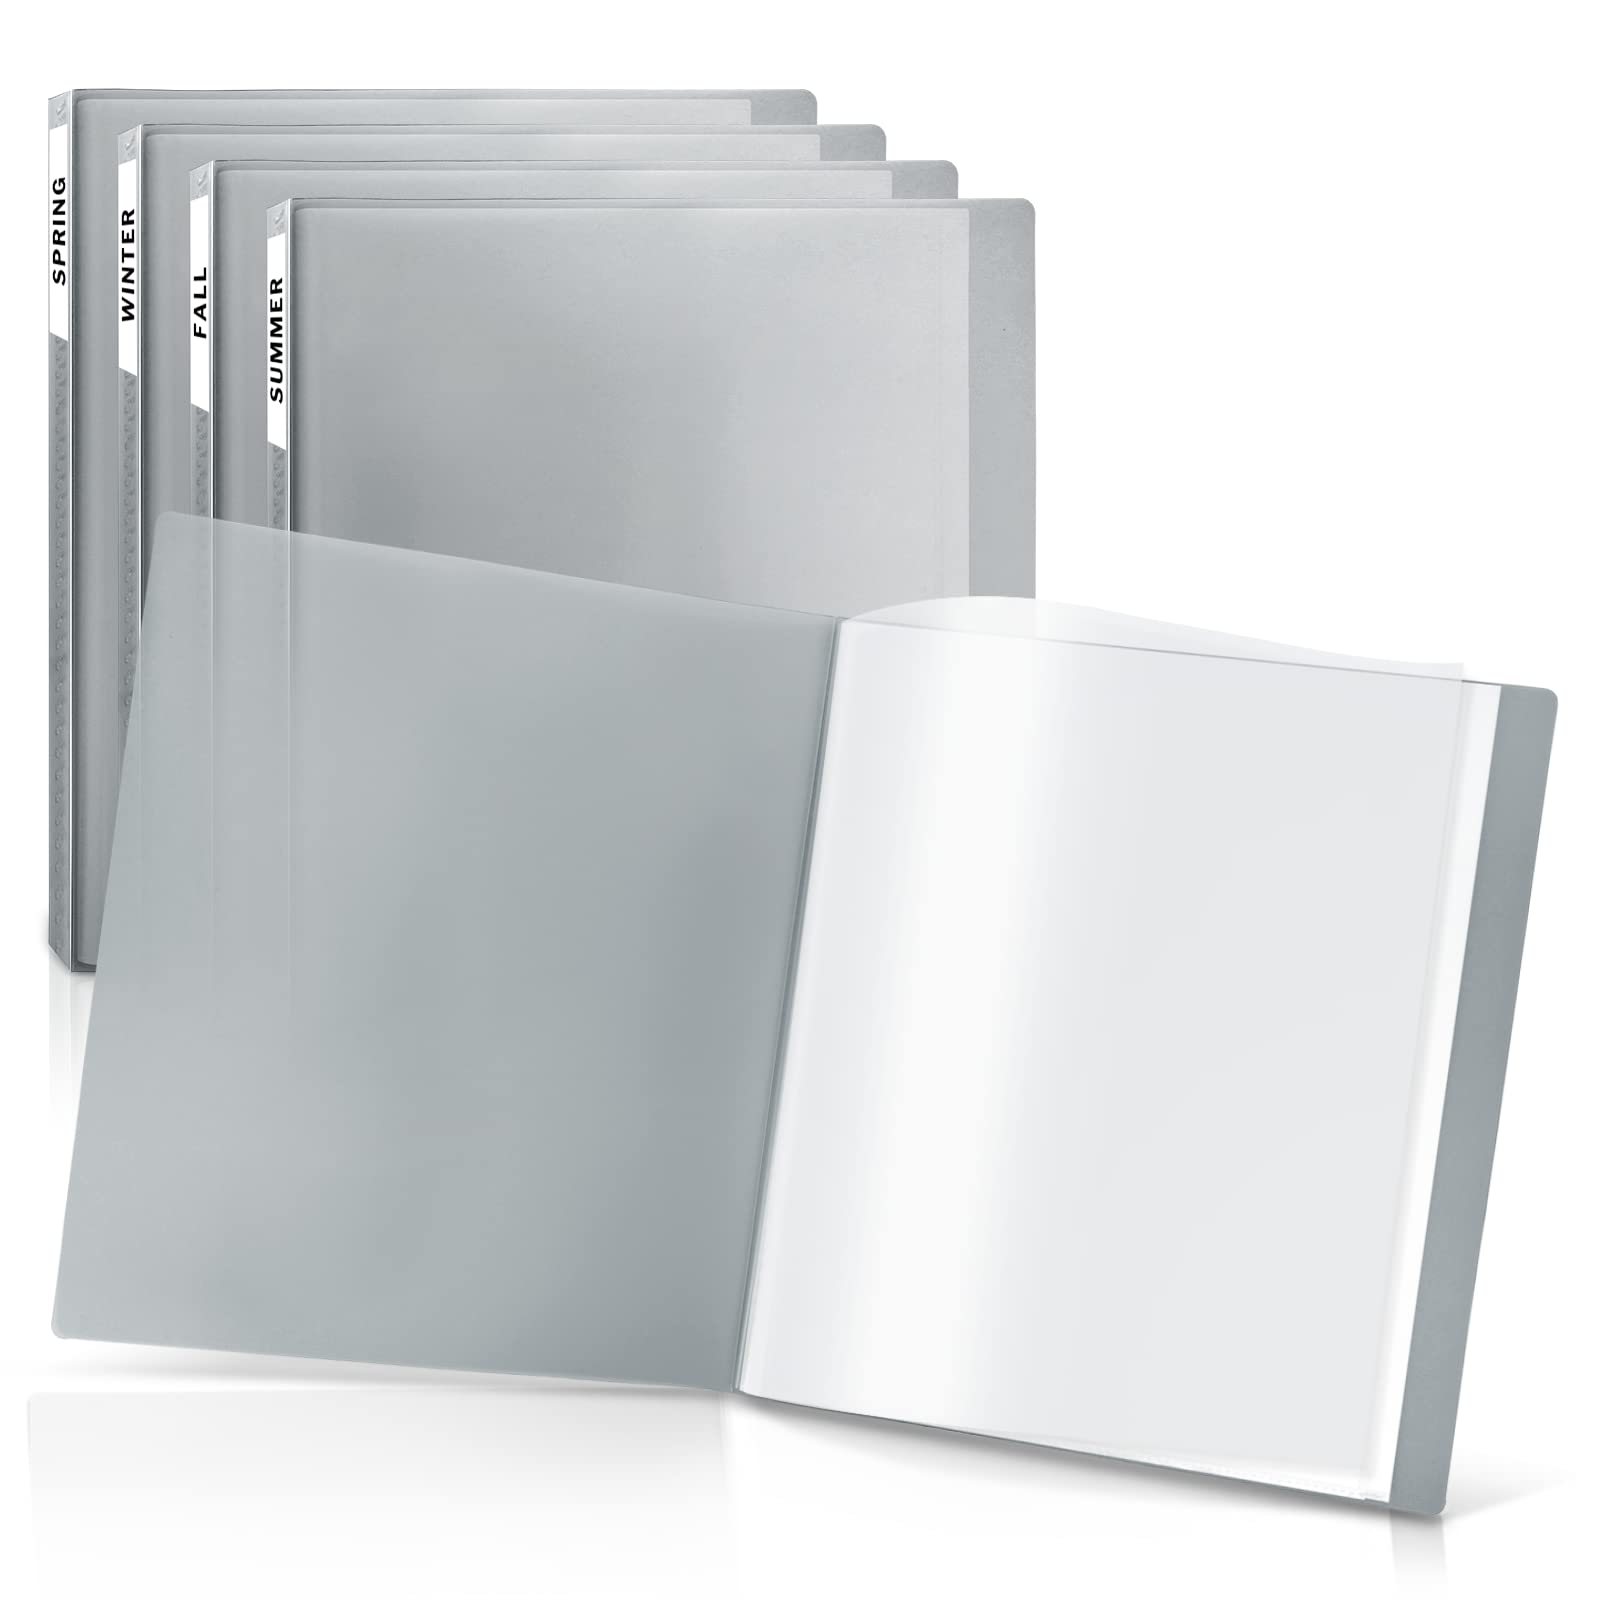 0 Cranbury Folder With Plastic Sleeves (4 Pack, Gray) - 85X11